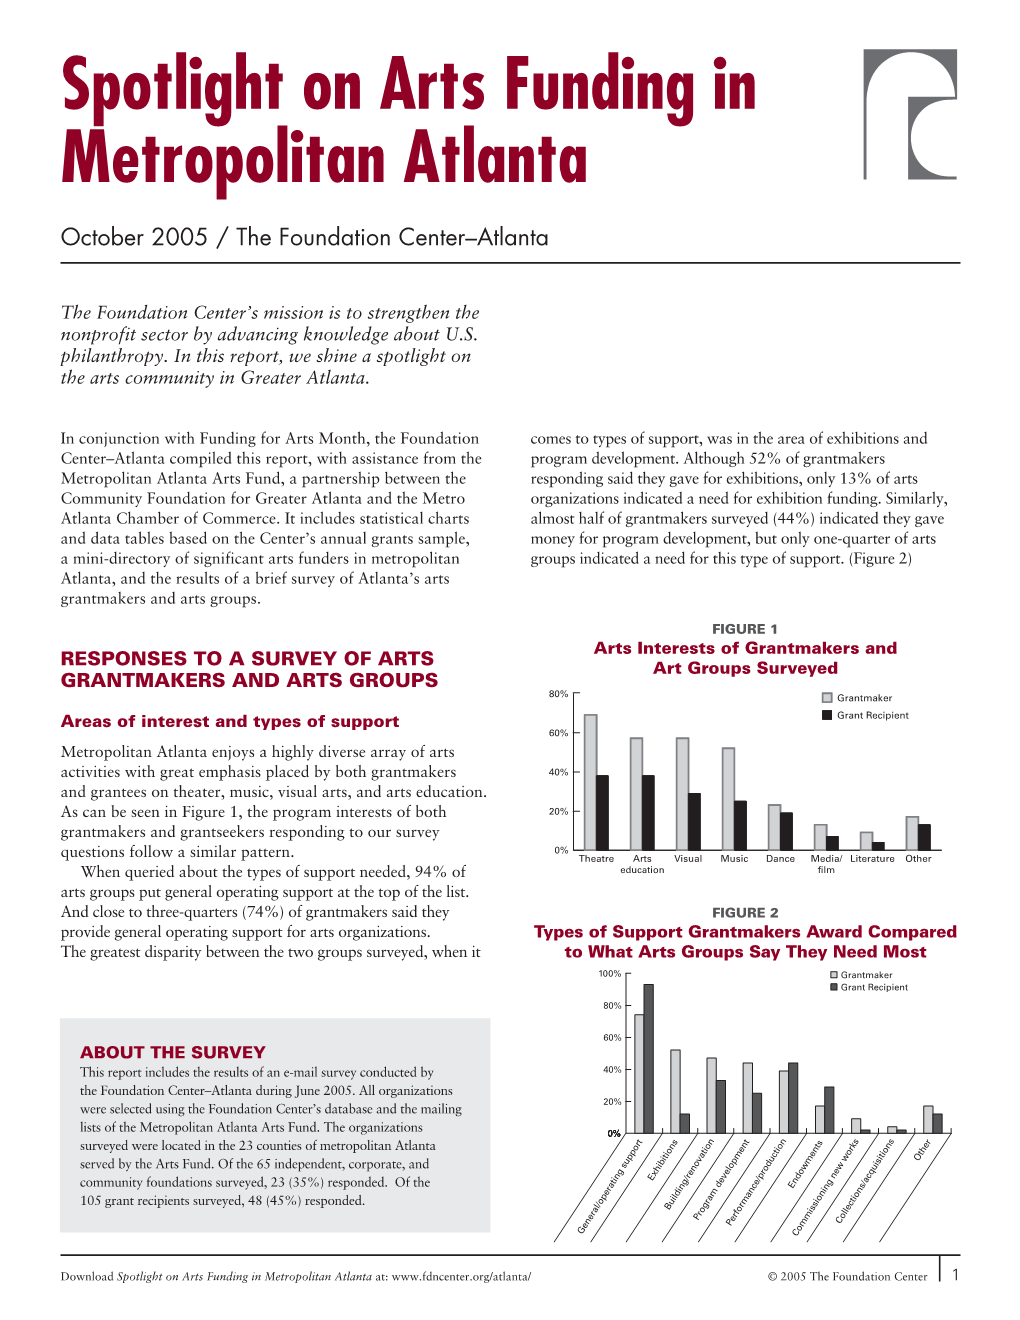 Spotlight on Arts Funding in Metropolitan Atlanta